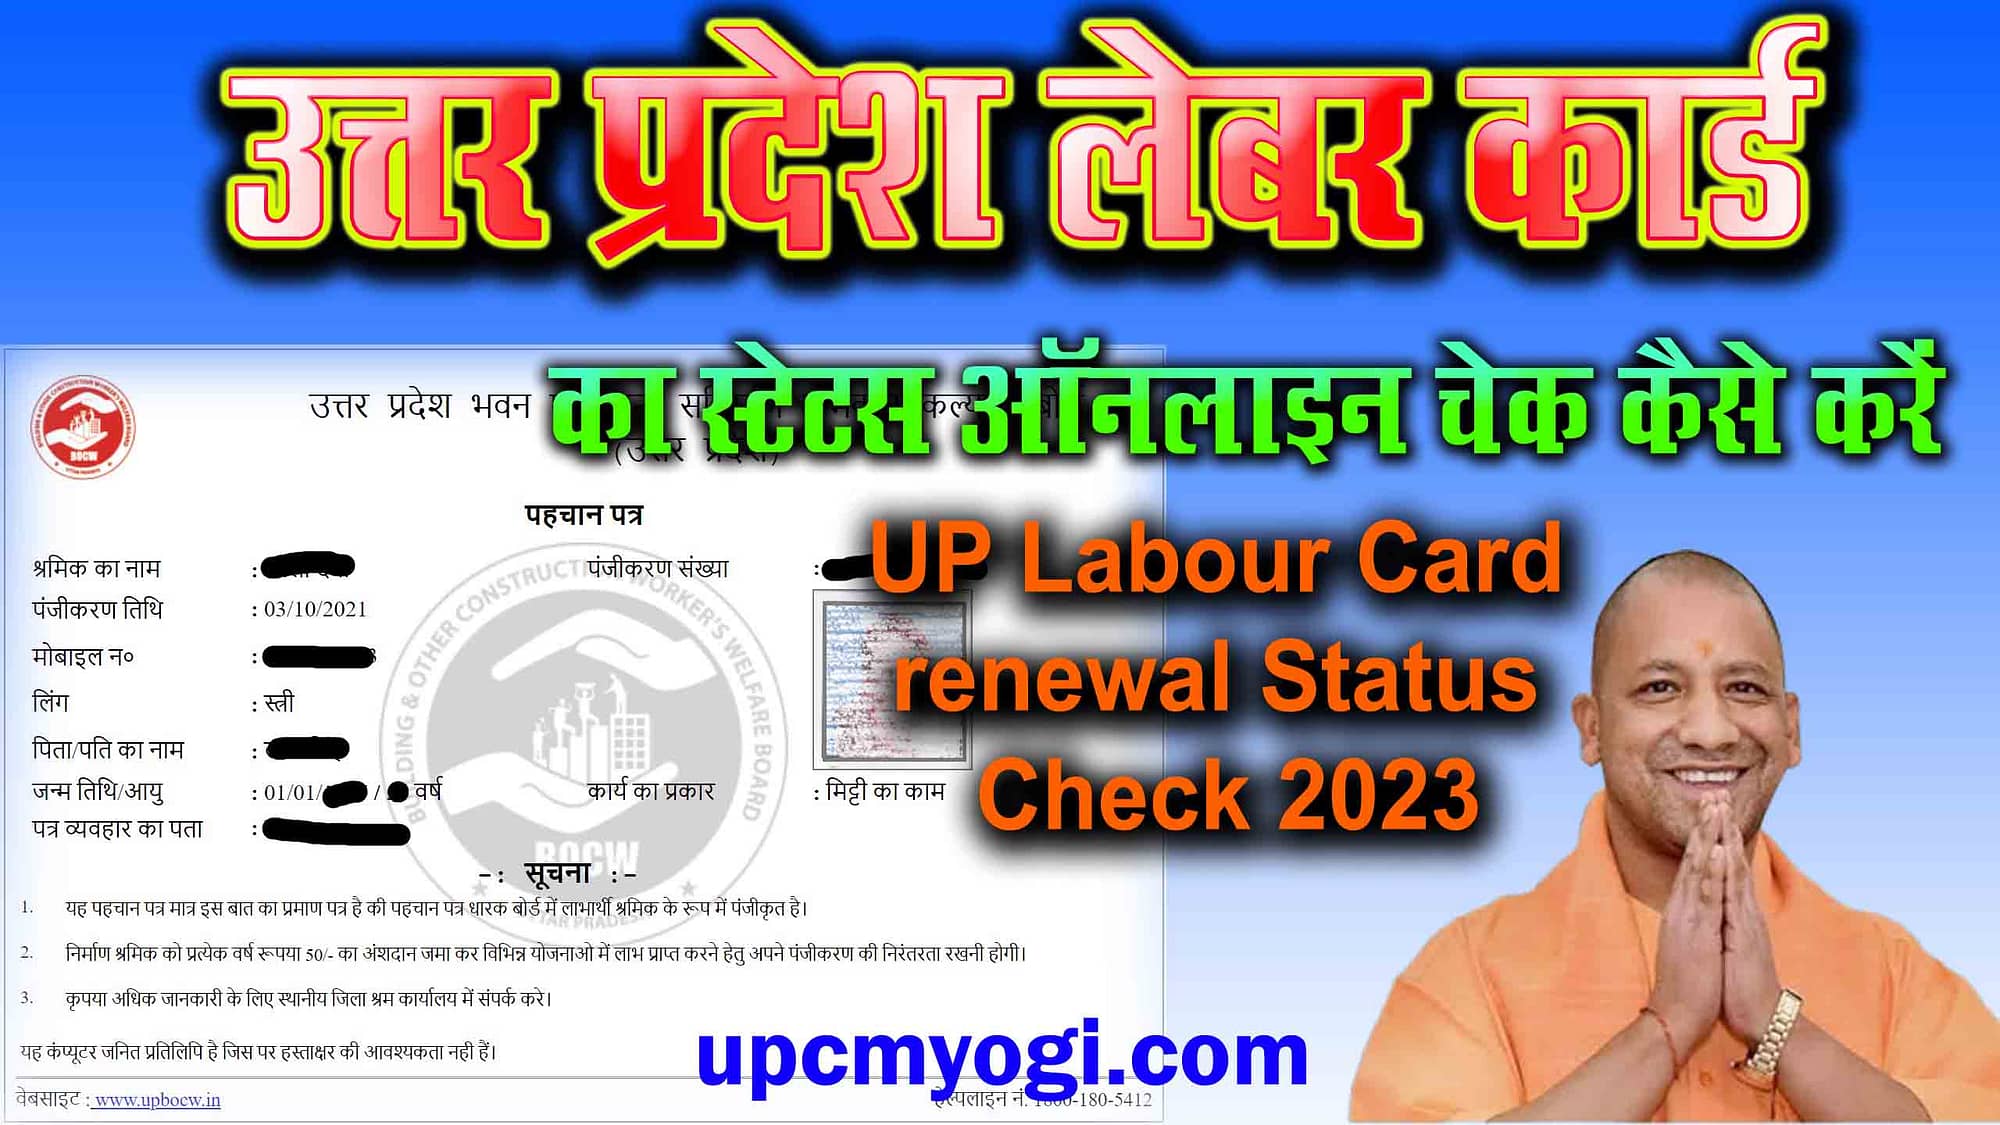 UP labour card status check Online 2023 तथा इसे बनवाने के लाभ